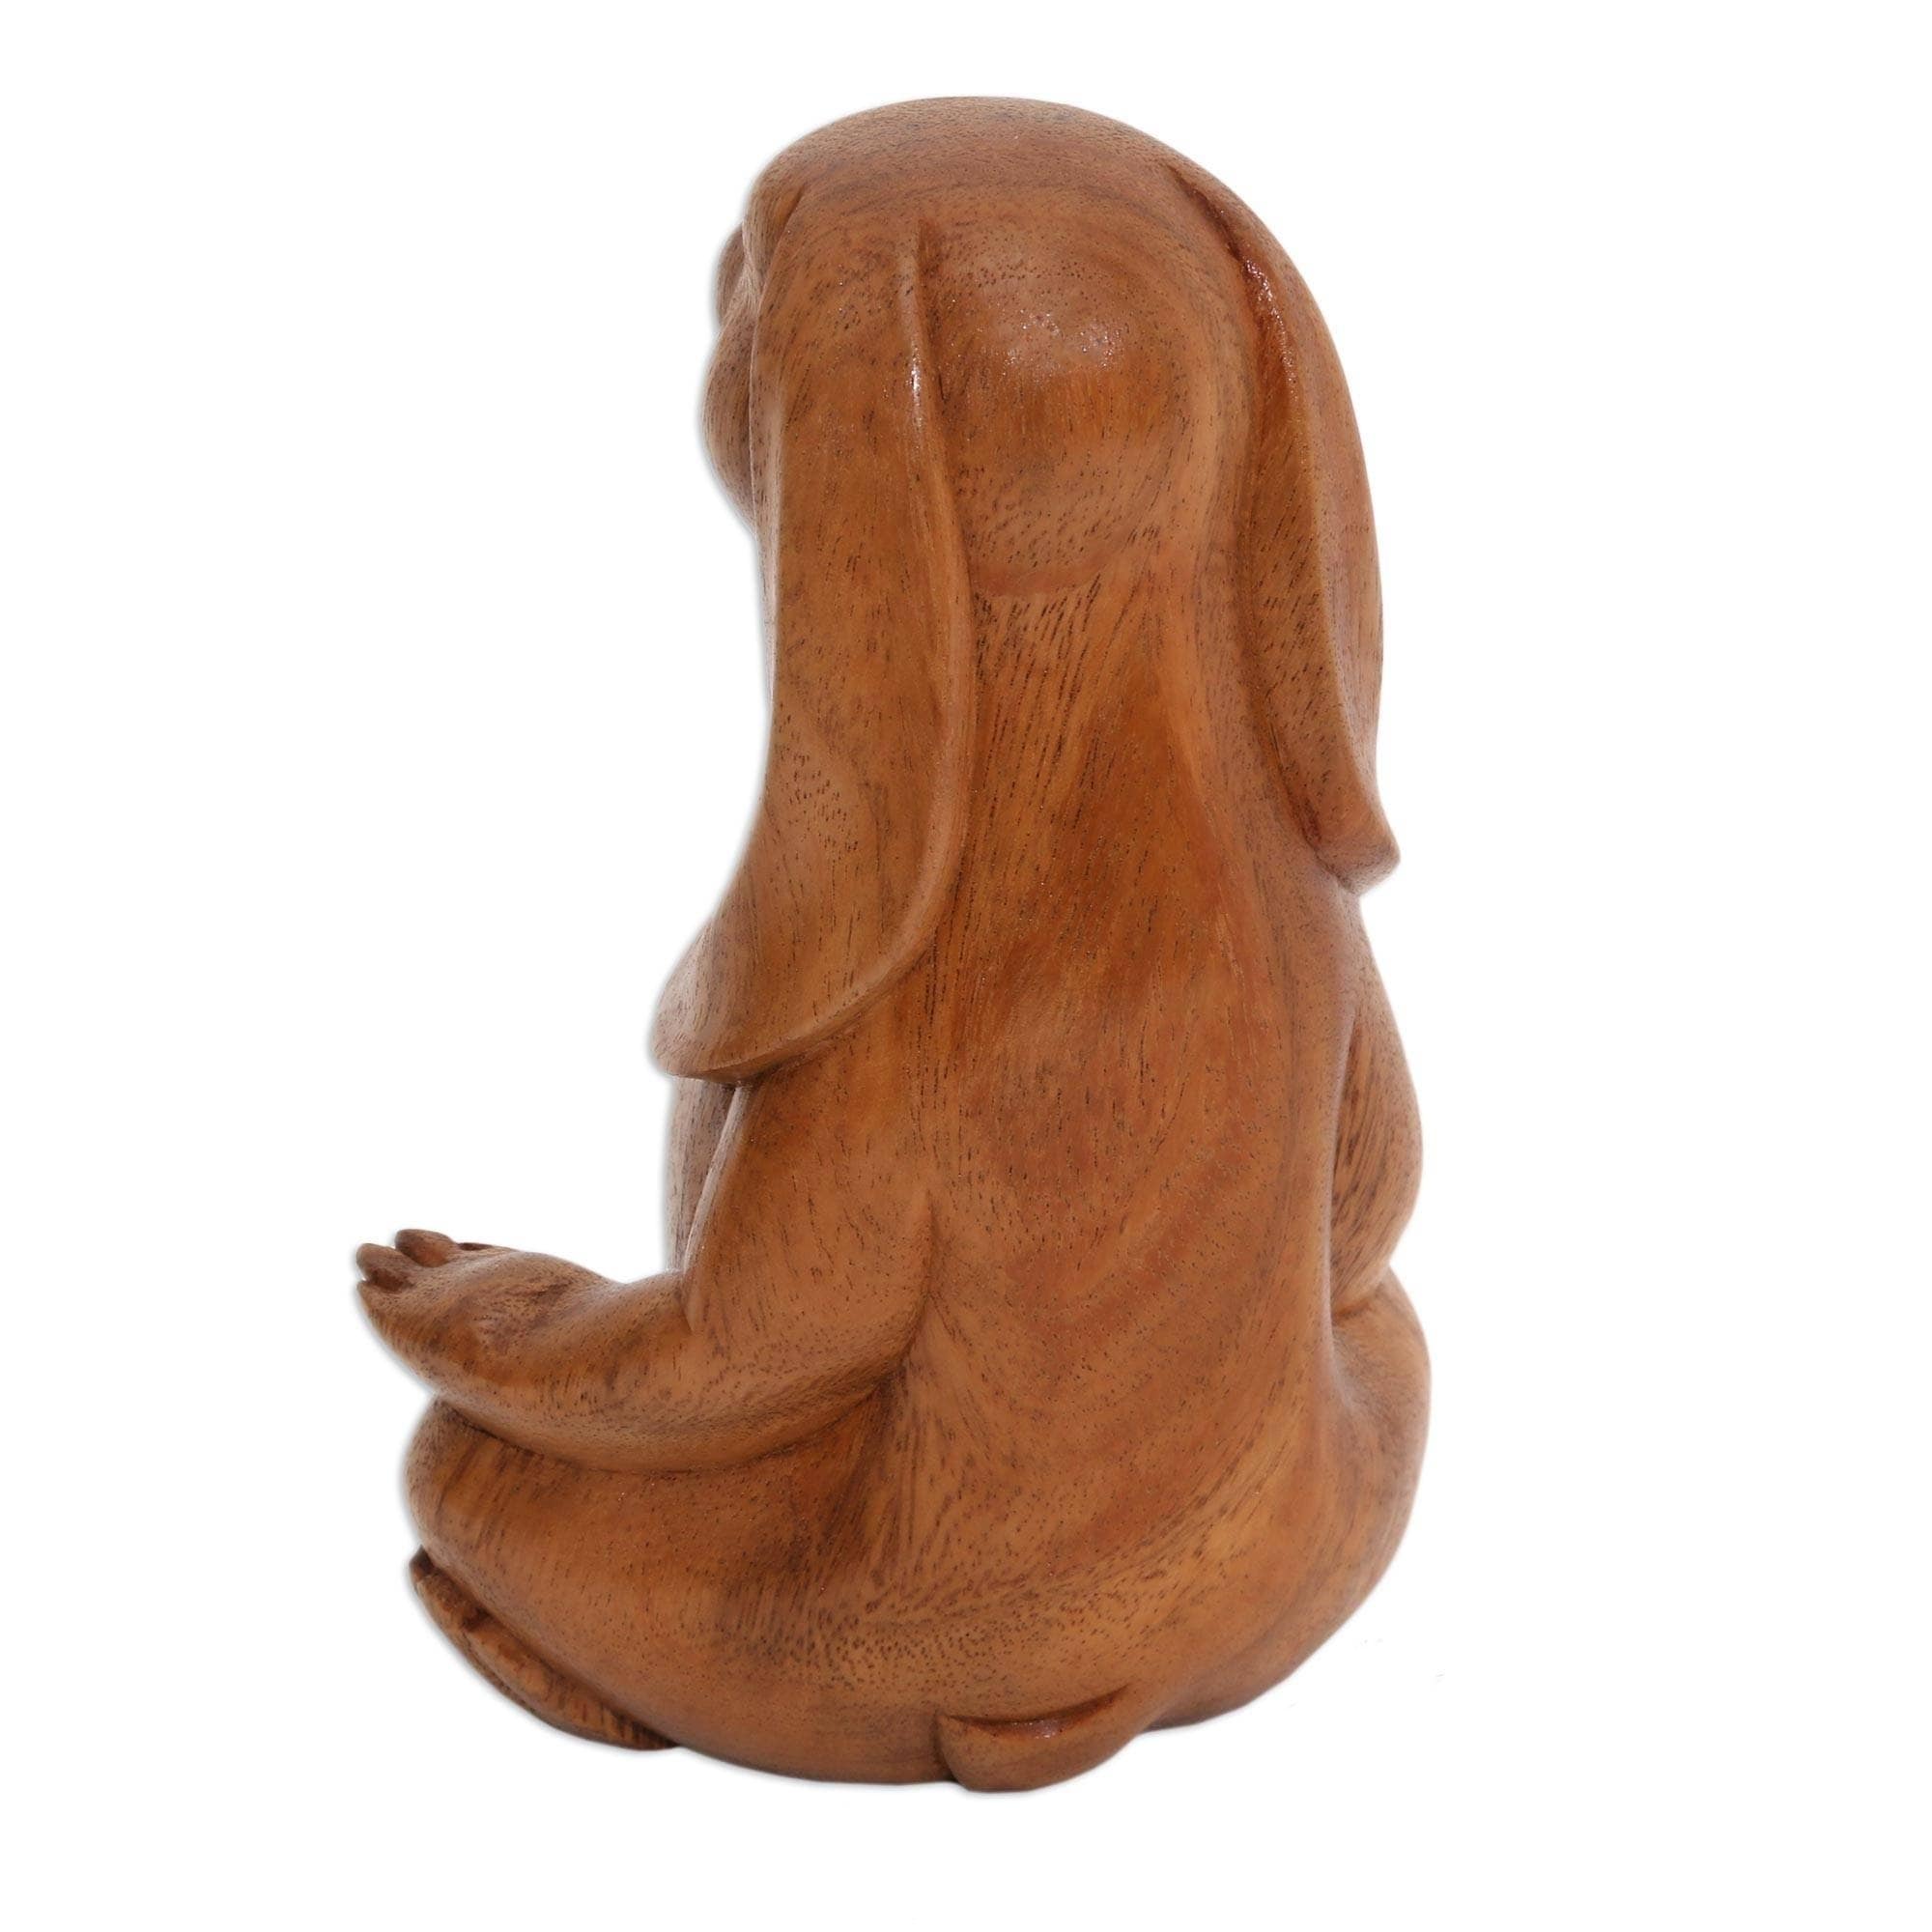 Handmade Pregnant Yoga Bunny Wood Sculpture (Indonesia) - 6.75" H x 4.3" W x 2.8" D